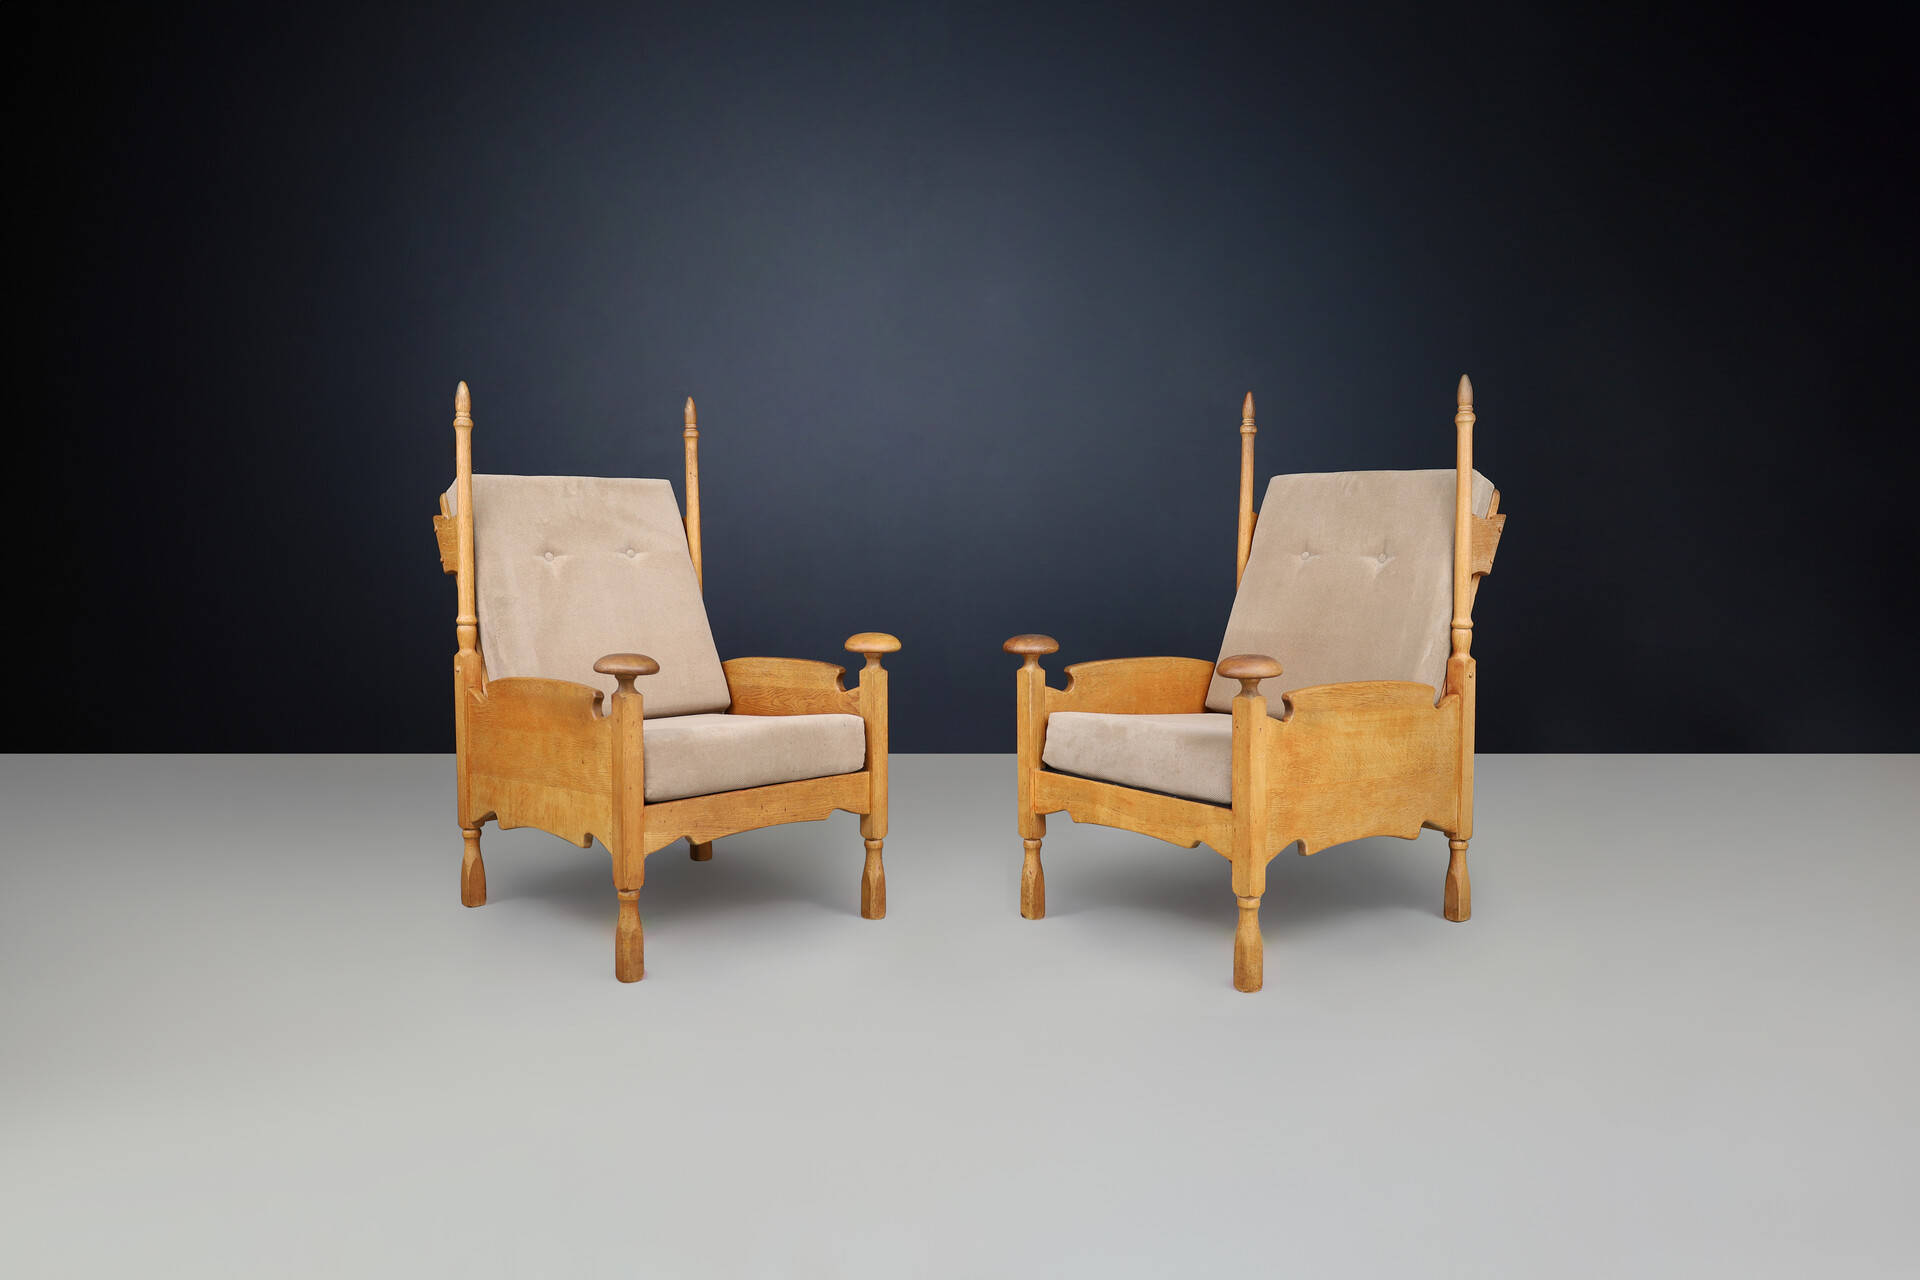 Brutalist Thron Chairs, Franne 1950s Mid-20th century